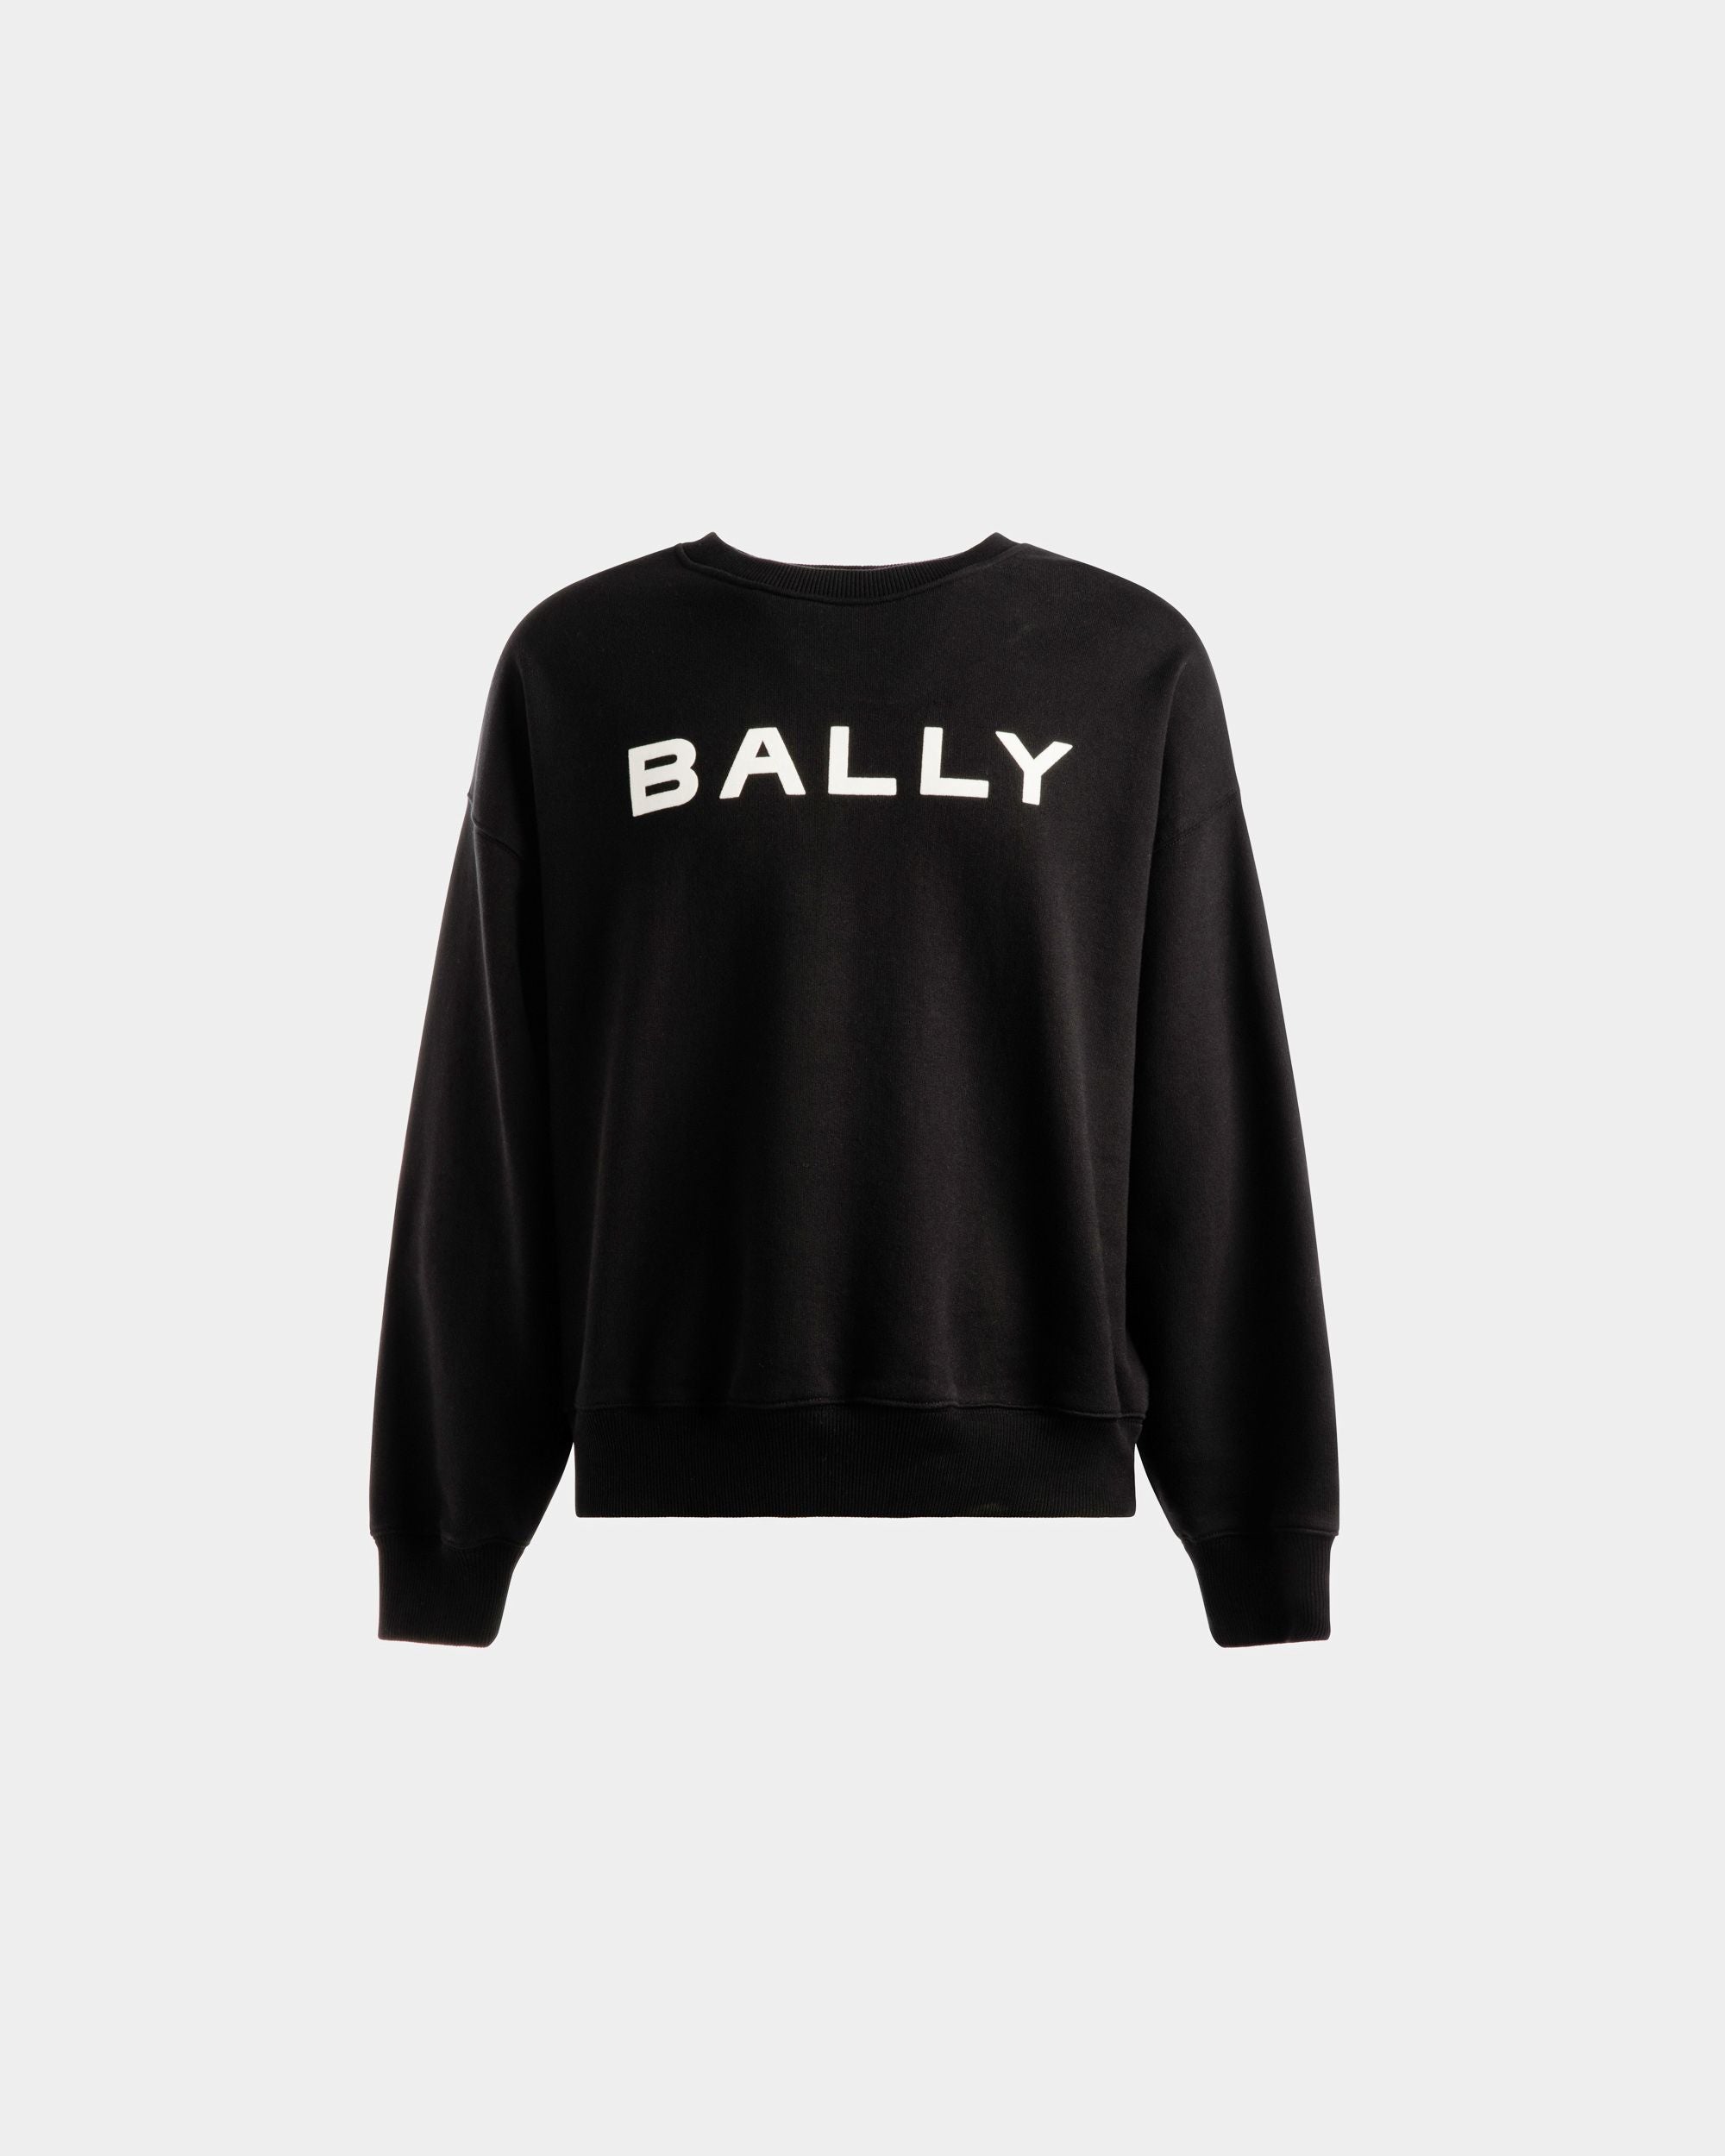 Men's Logo Sweatshirt In Black Cotton | Bally | Still Life Front